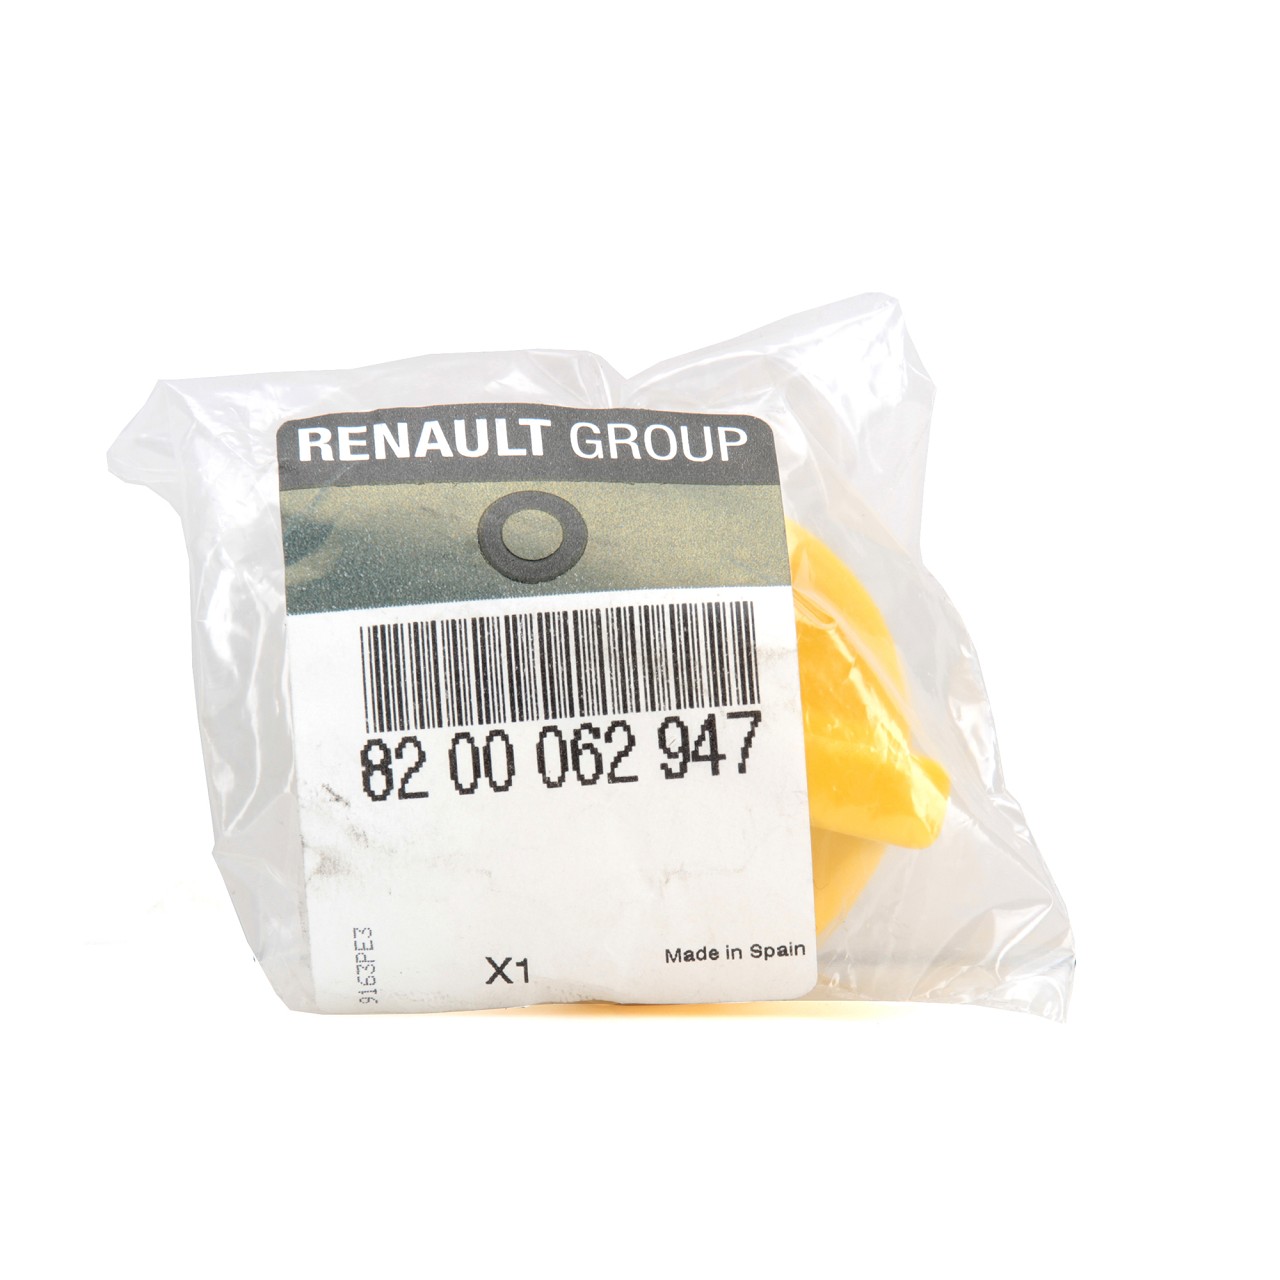 ORIGINAL Renault Ölverschlusskappe Öldeckel Ölkappe Ölverschluss 8200062947